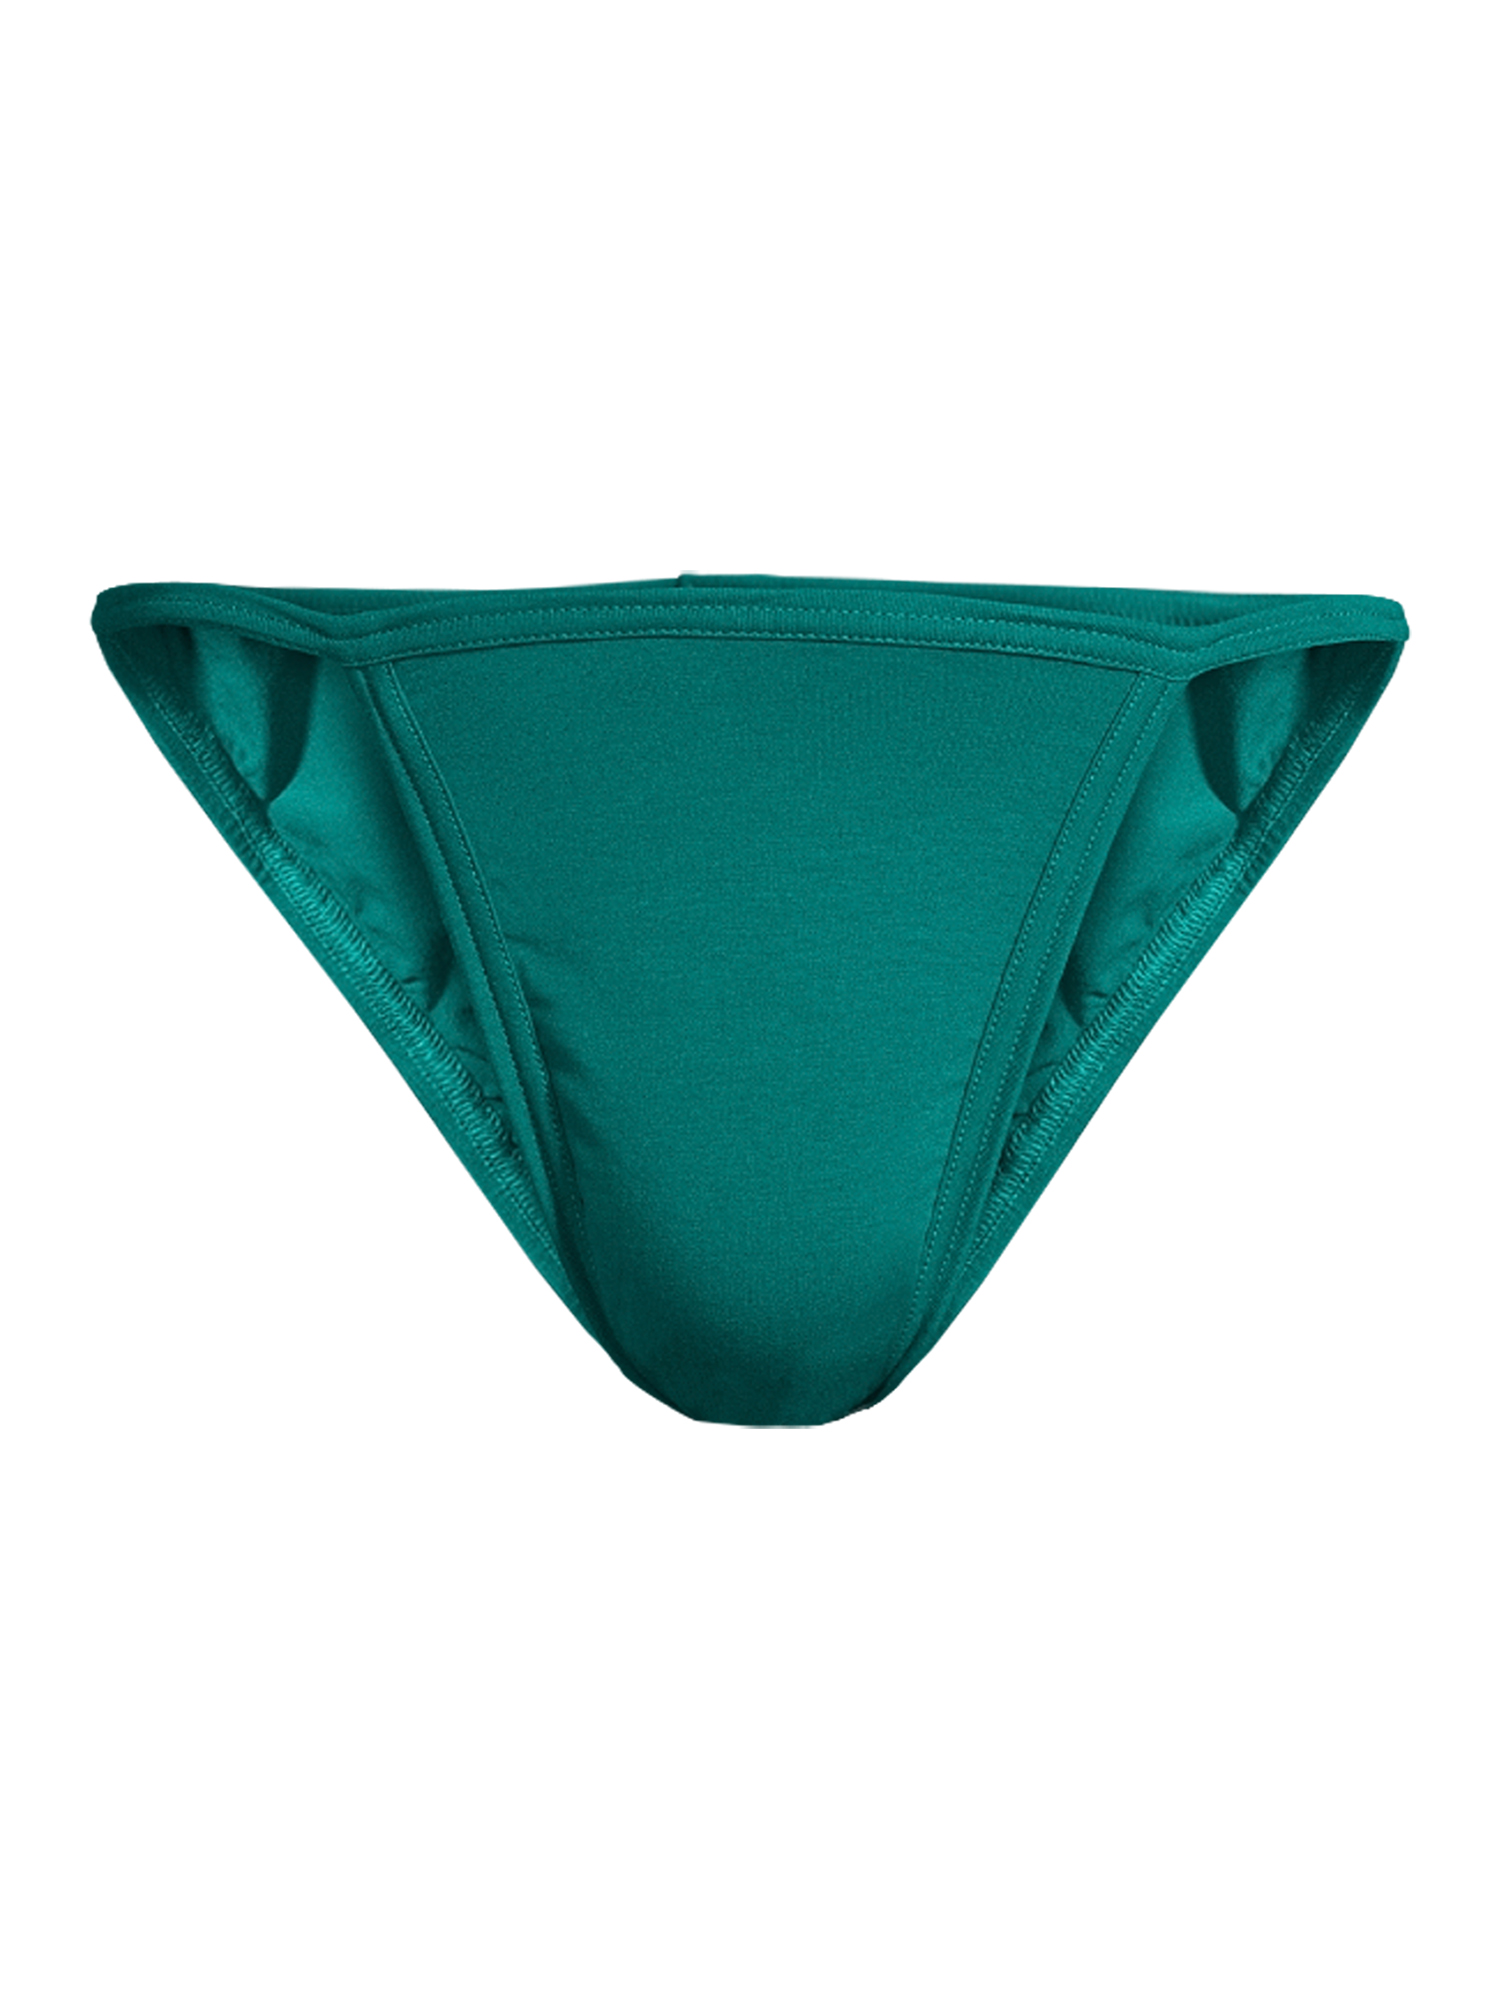 Hanes Men's Comfort Flex Fit Ultra Soft Cotton Stretch String Bikinis, 6 Pack - image 5 of 7